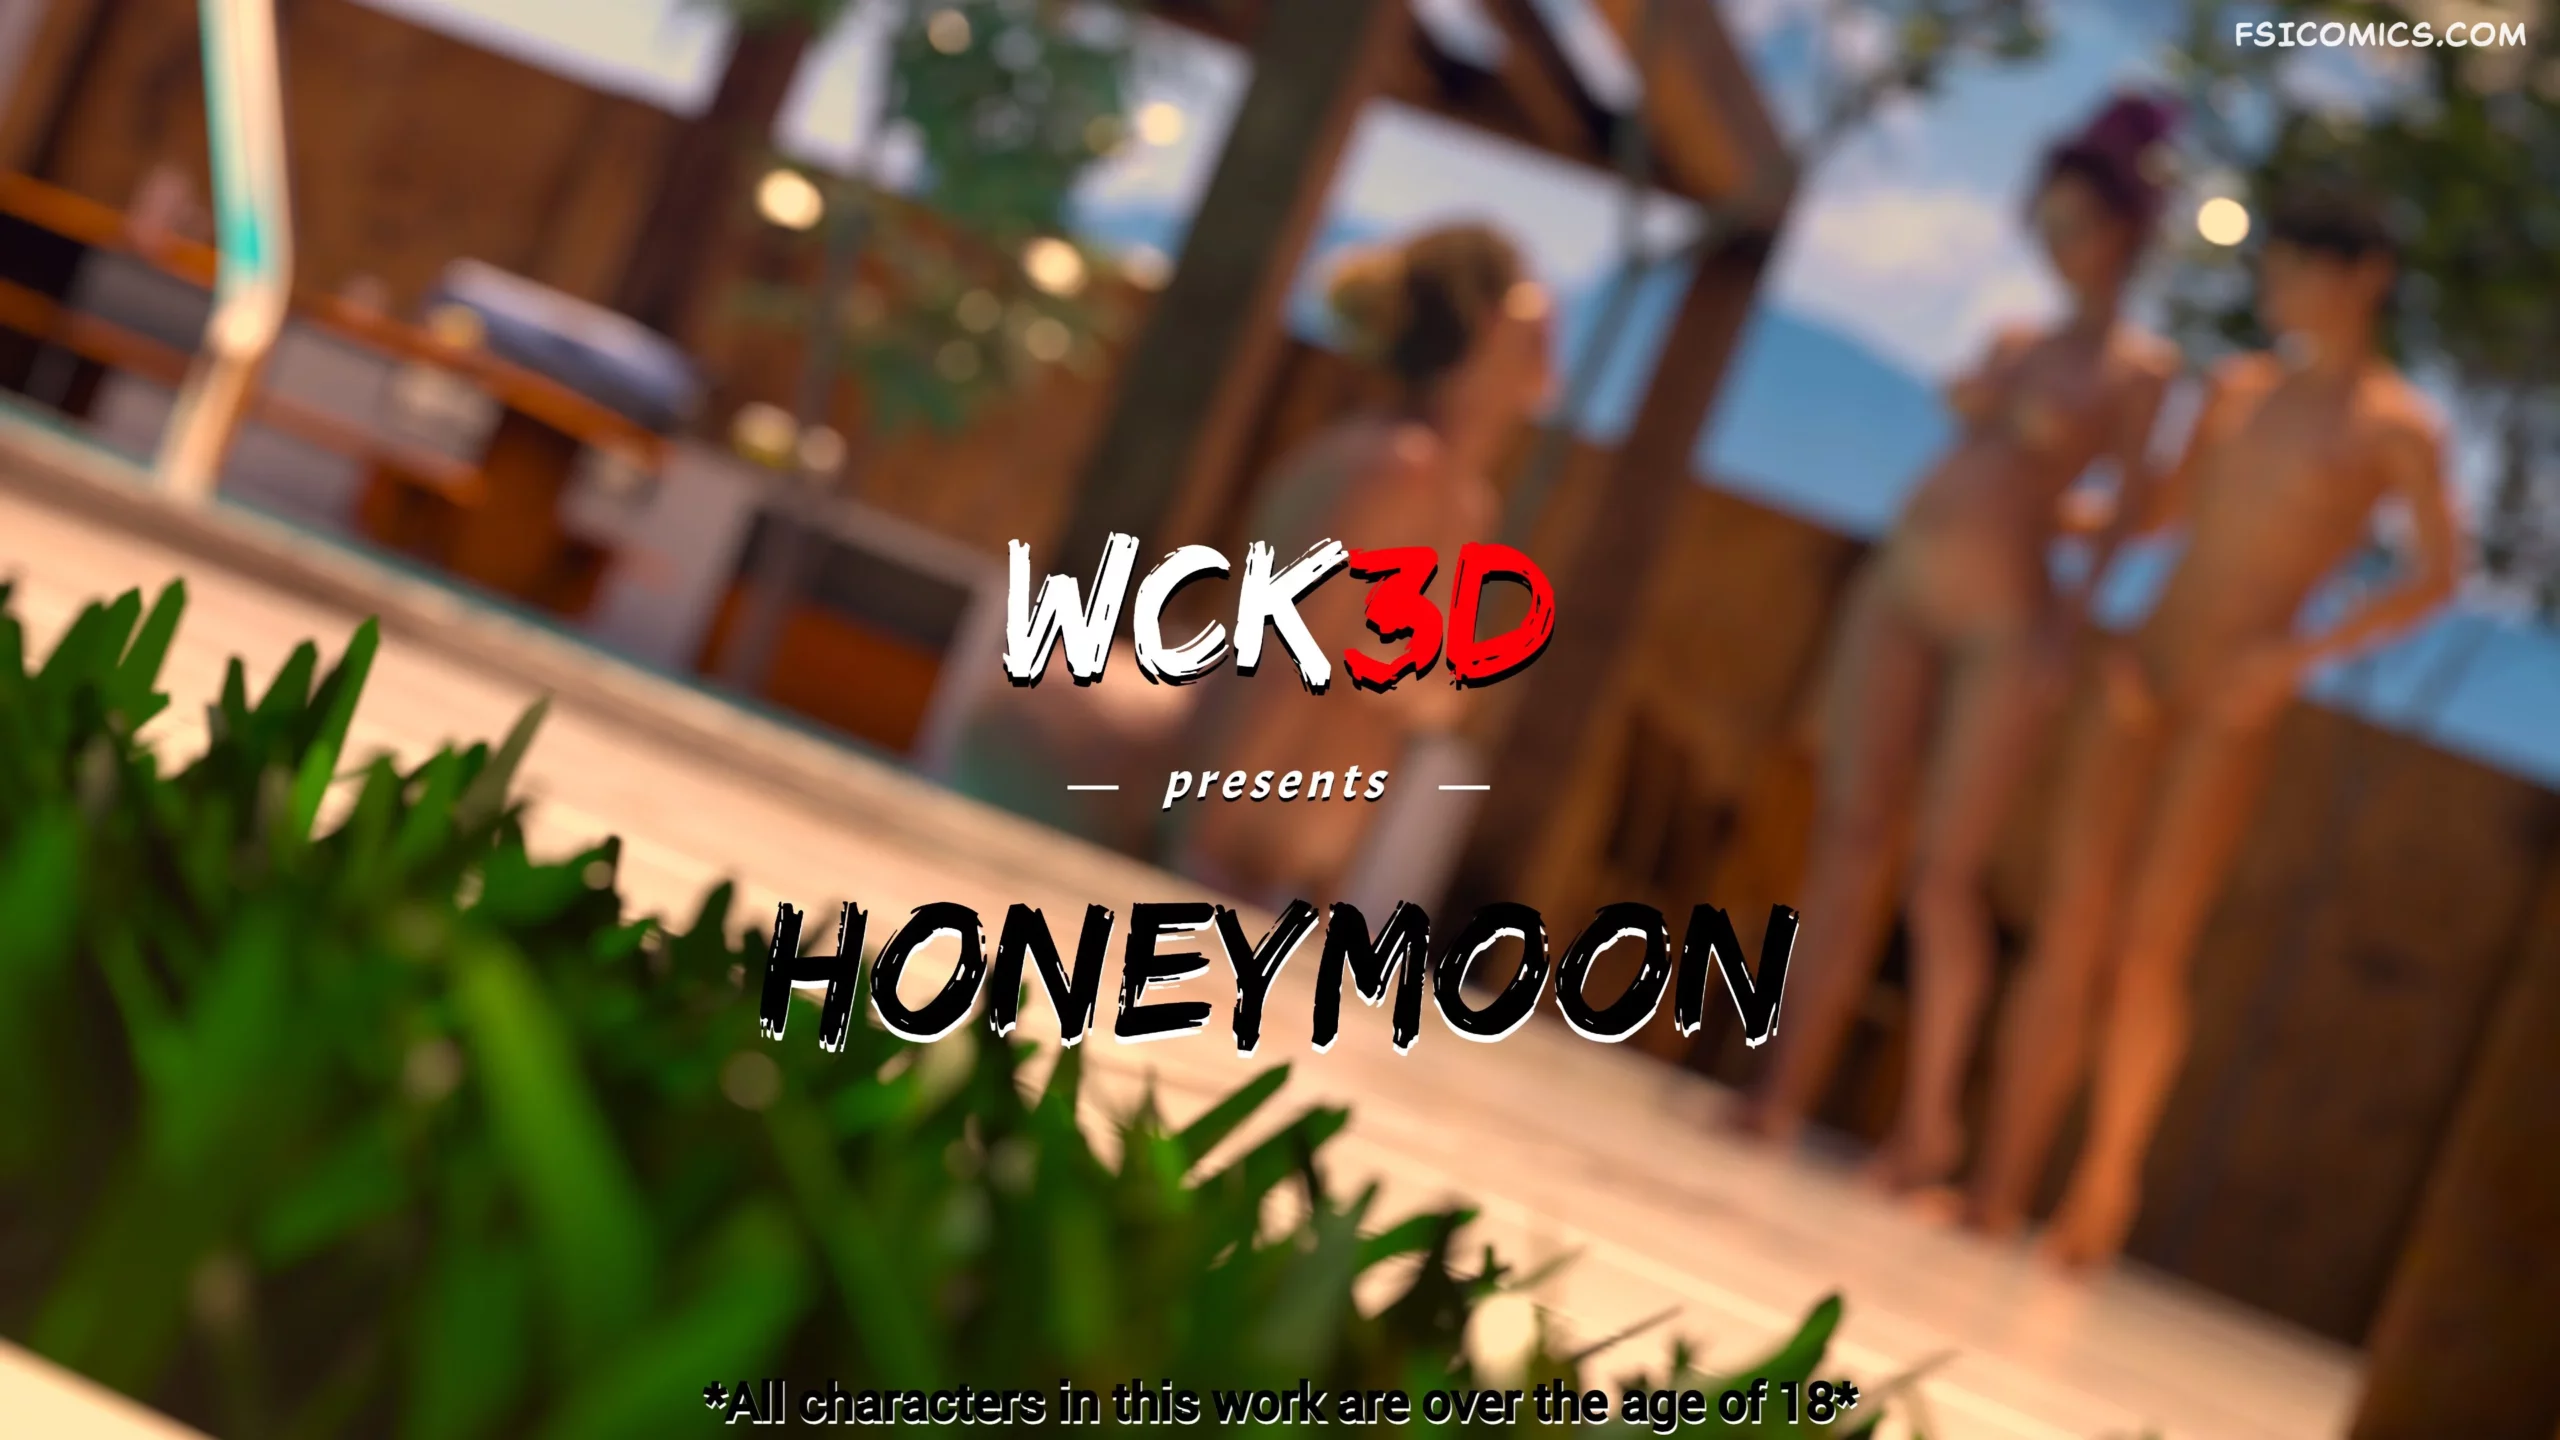 Between Us - Honeymoon - WCK3D - 211 - FSIComics